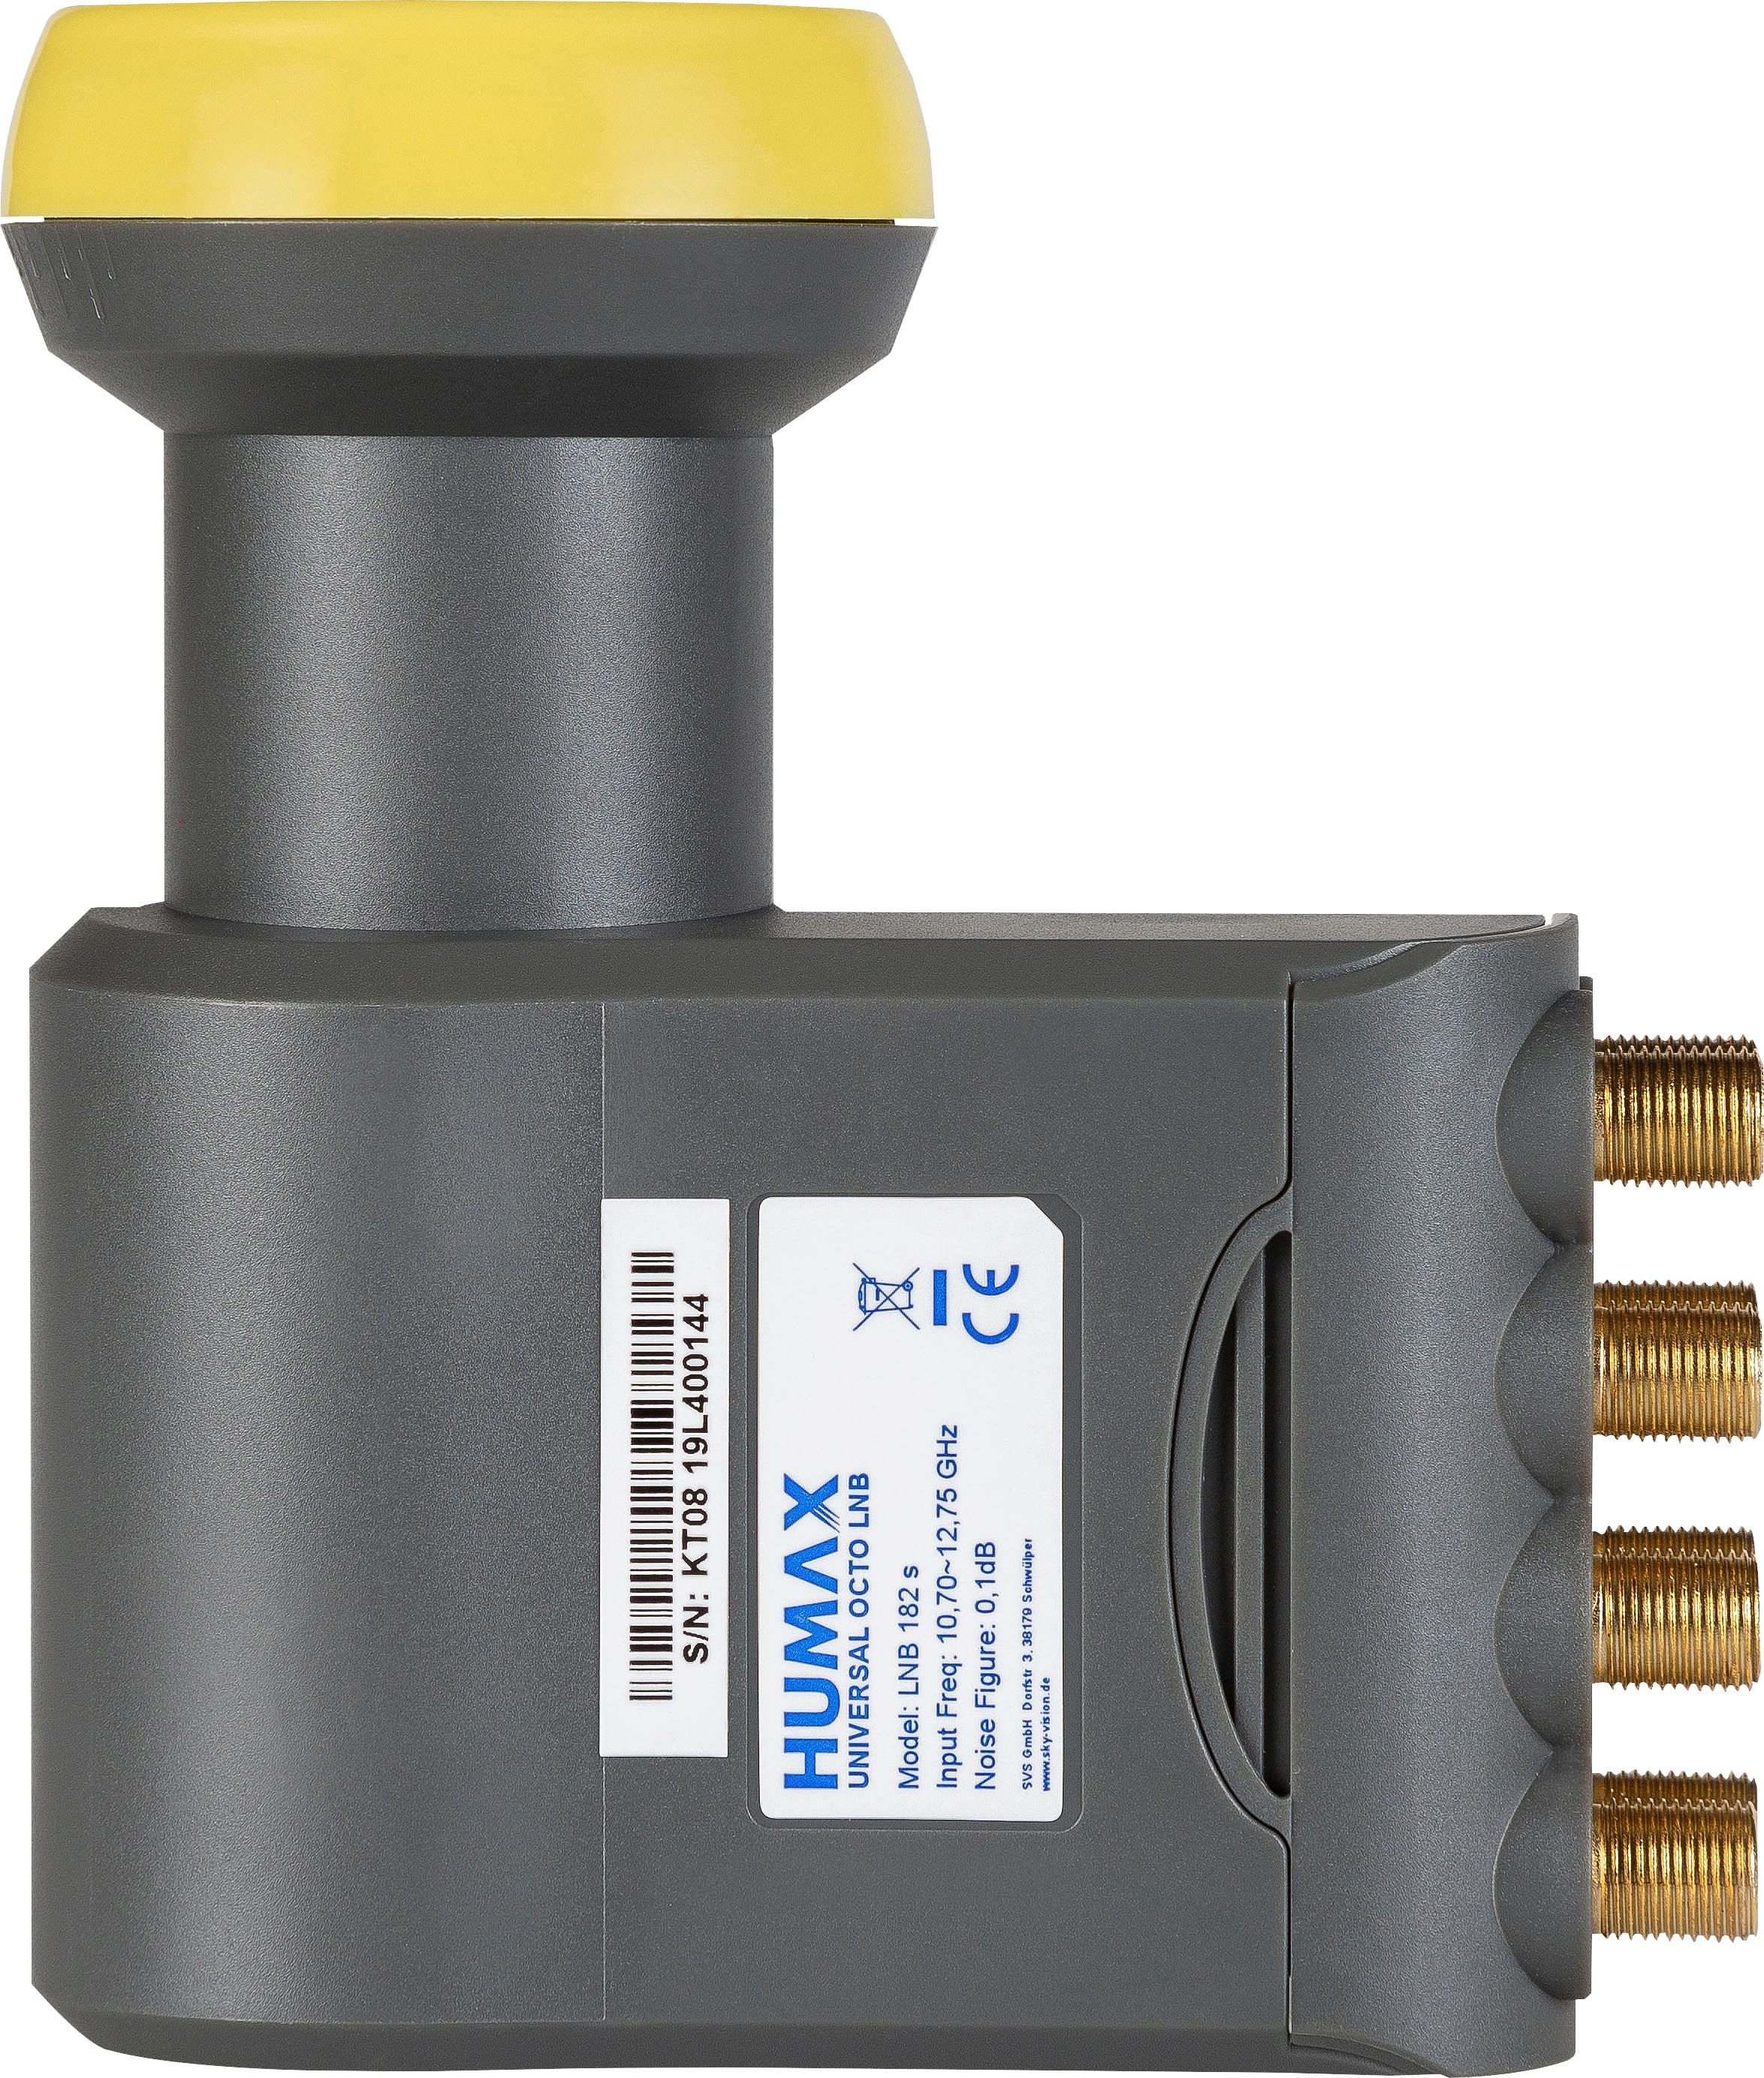 Humax SAT-Antenne »LNB 182s Gold Octo Universal LNB«